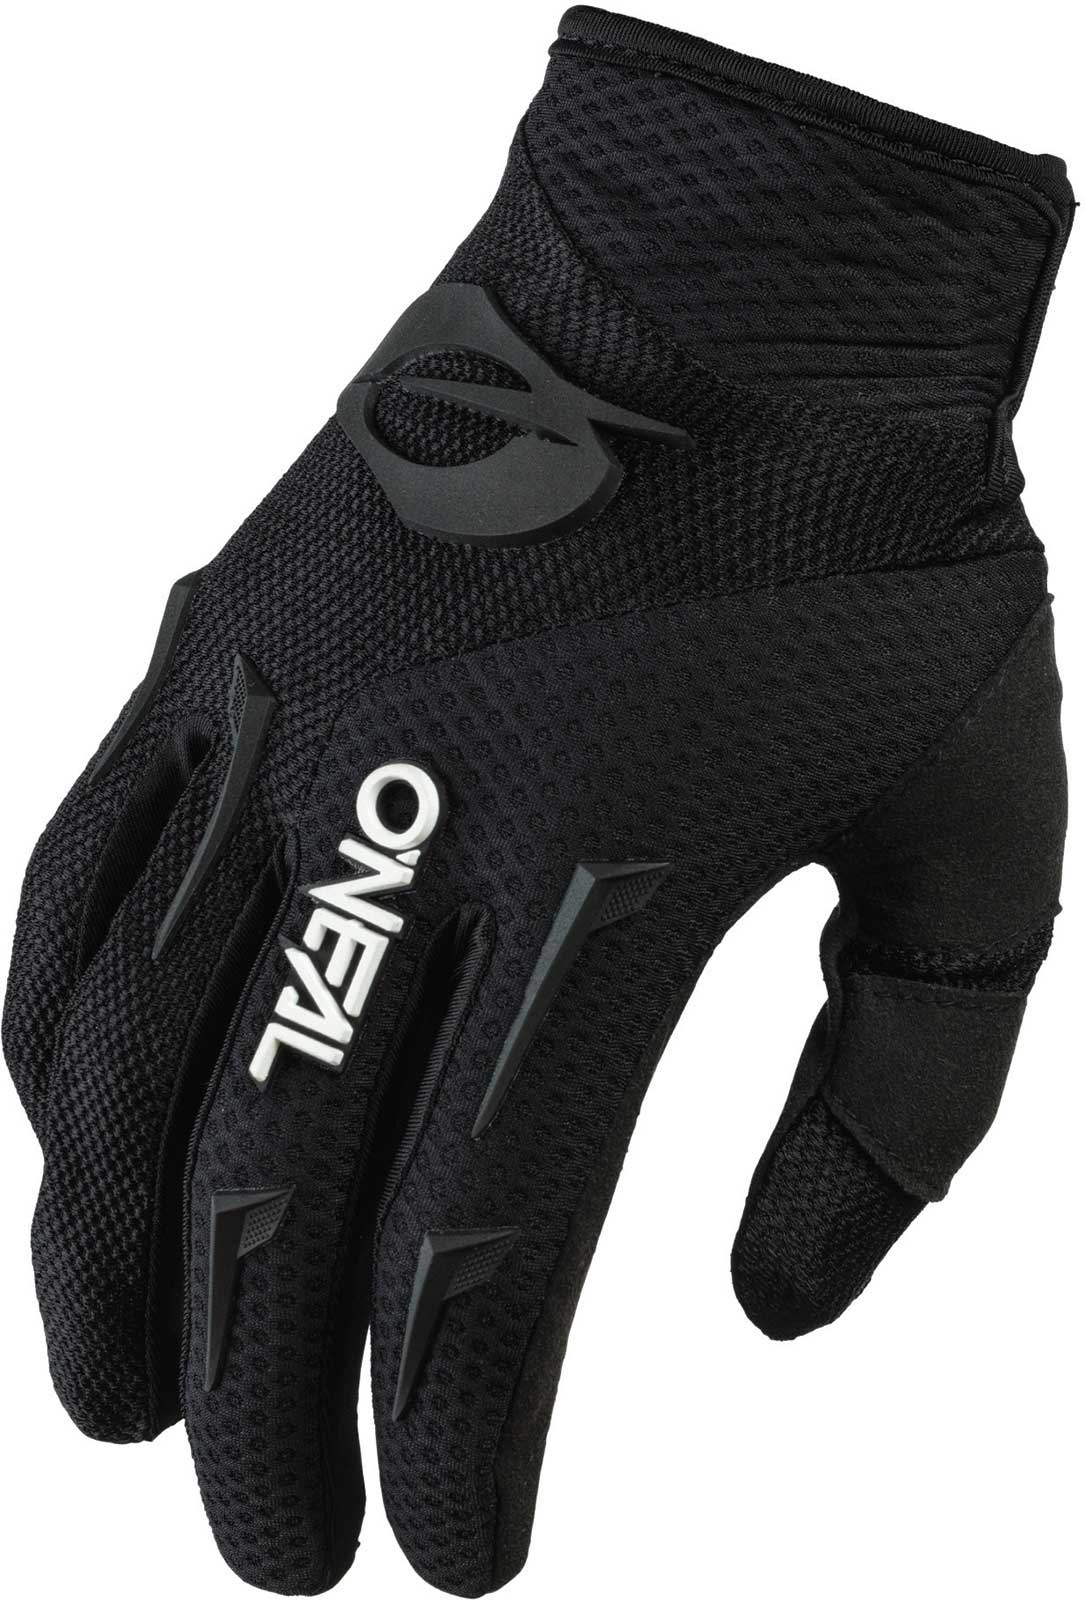 Motorrad Handschuhe Gloves Moto Cross MX SX Enduro Motorrad Quad Handschuhe neu 